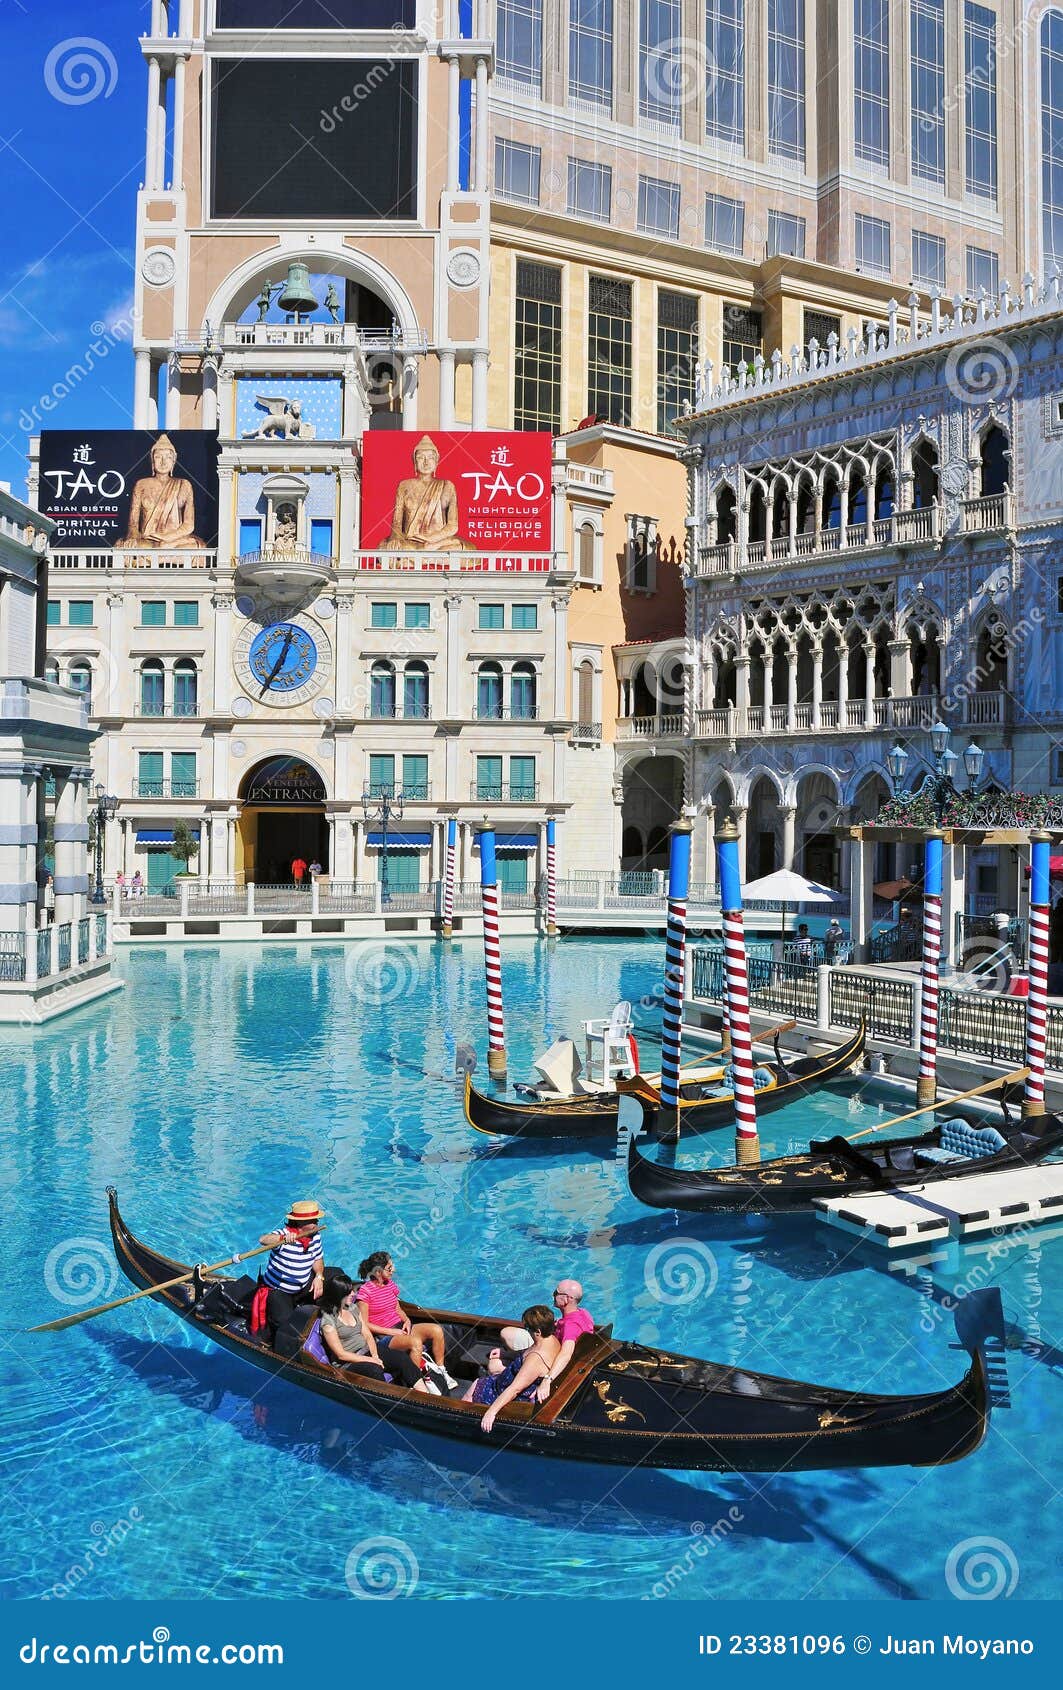 The Venetian Las Vegas Hotel Casino